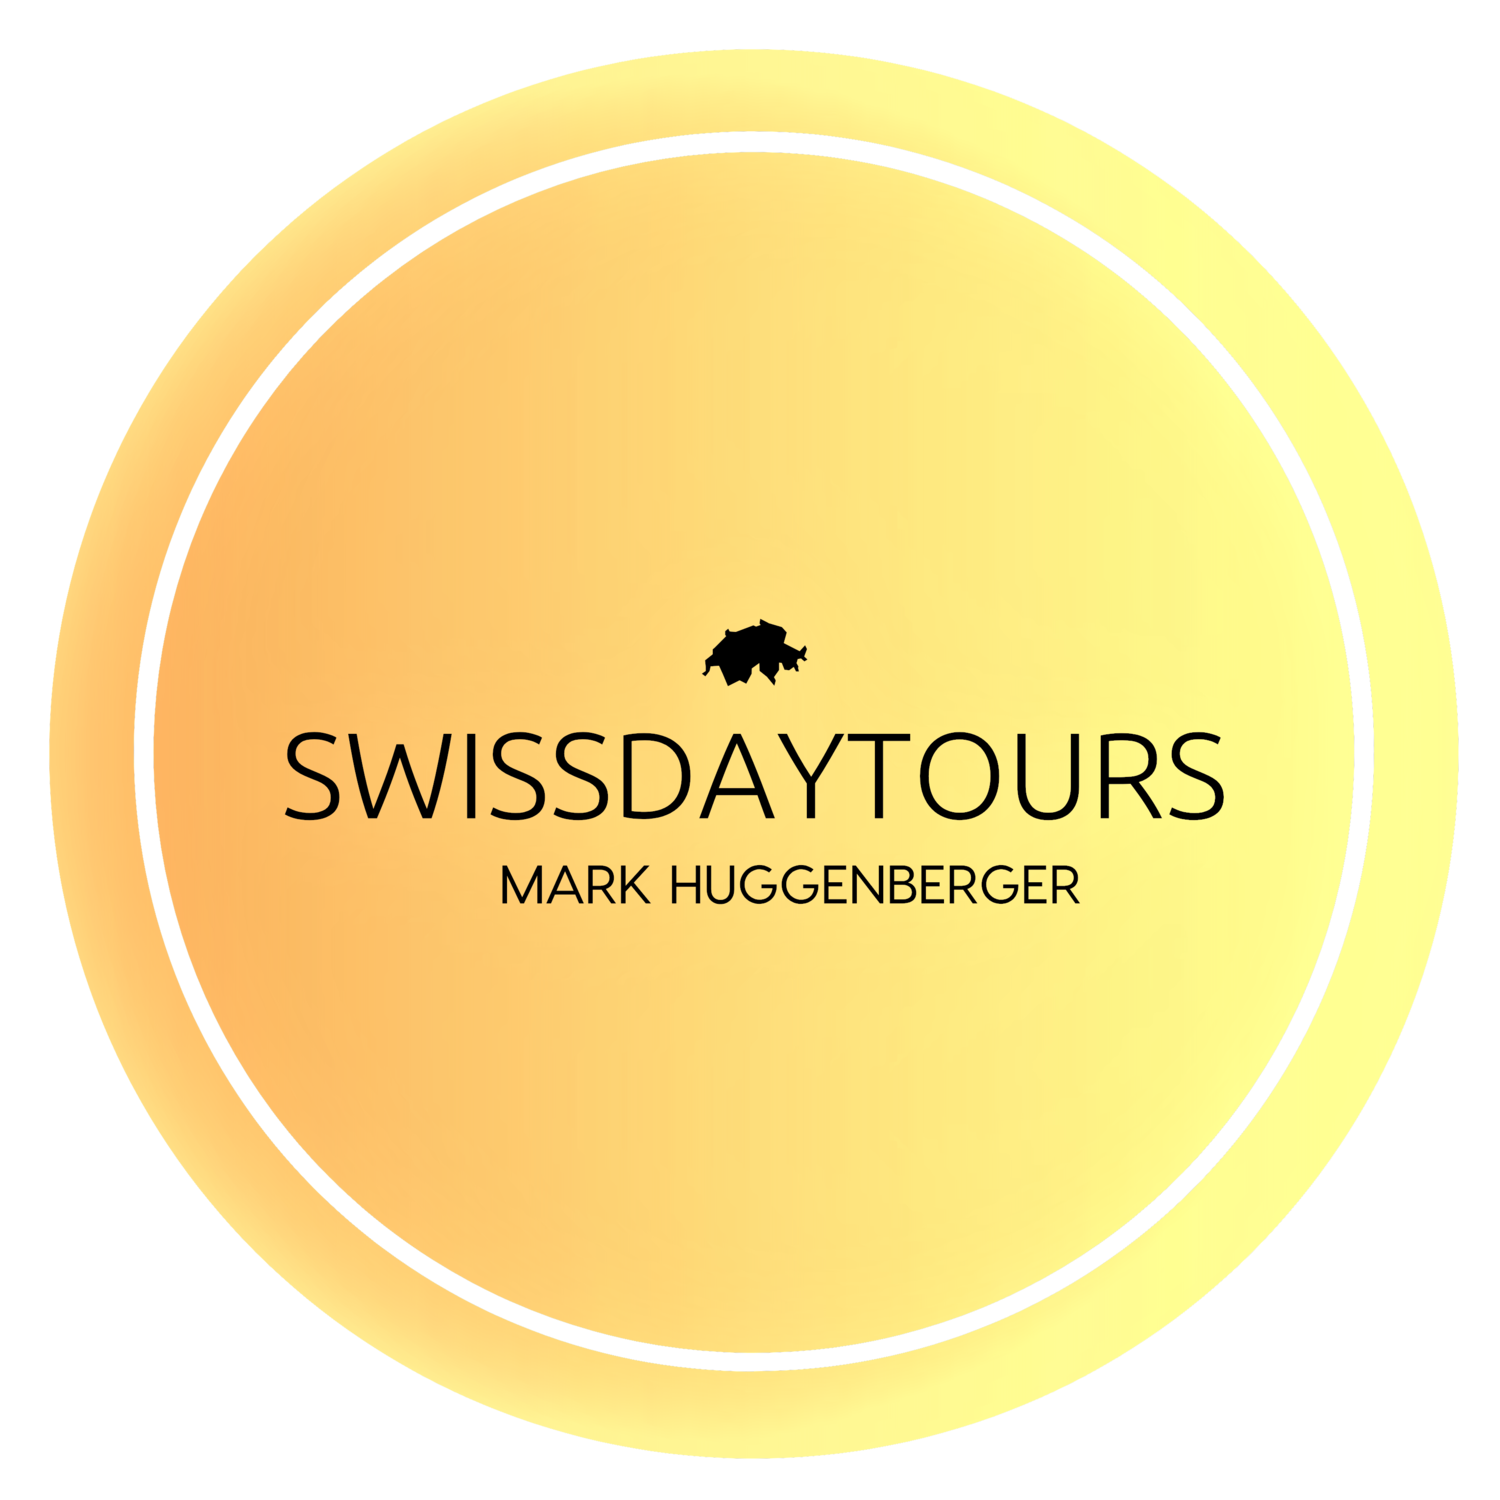 Swissdaytours